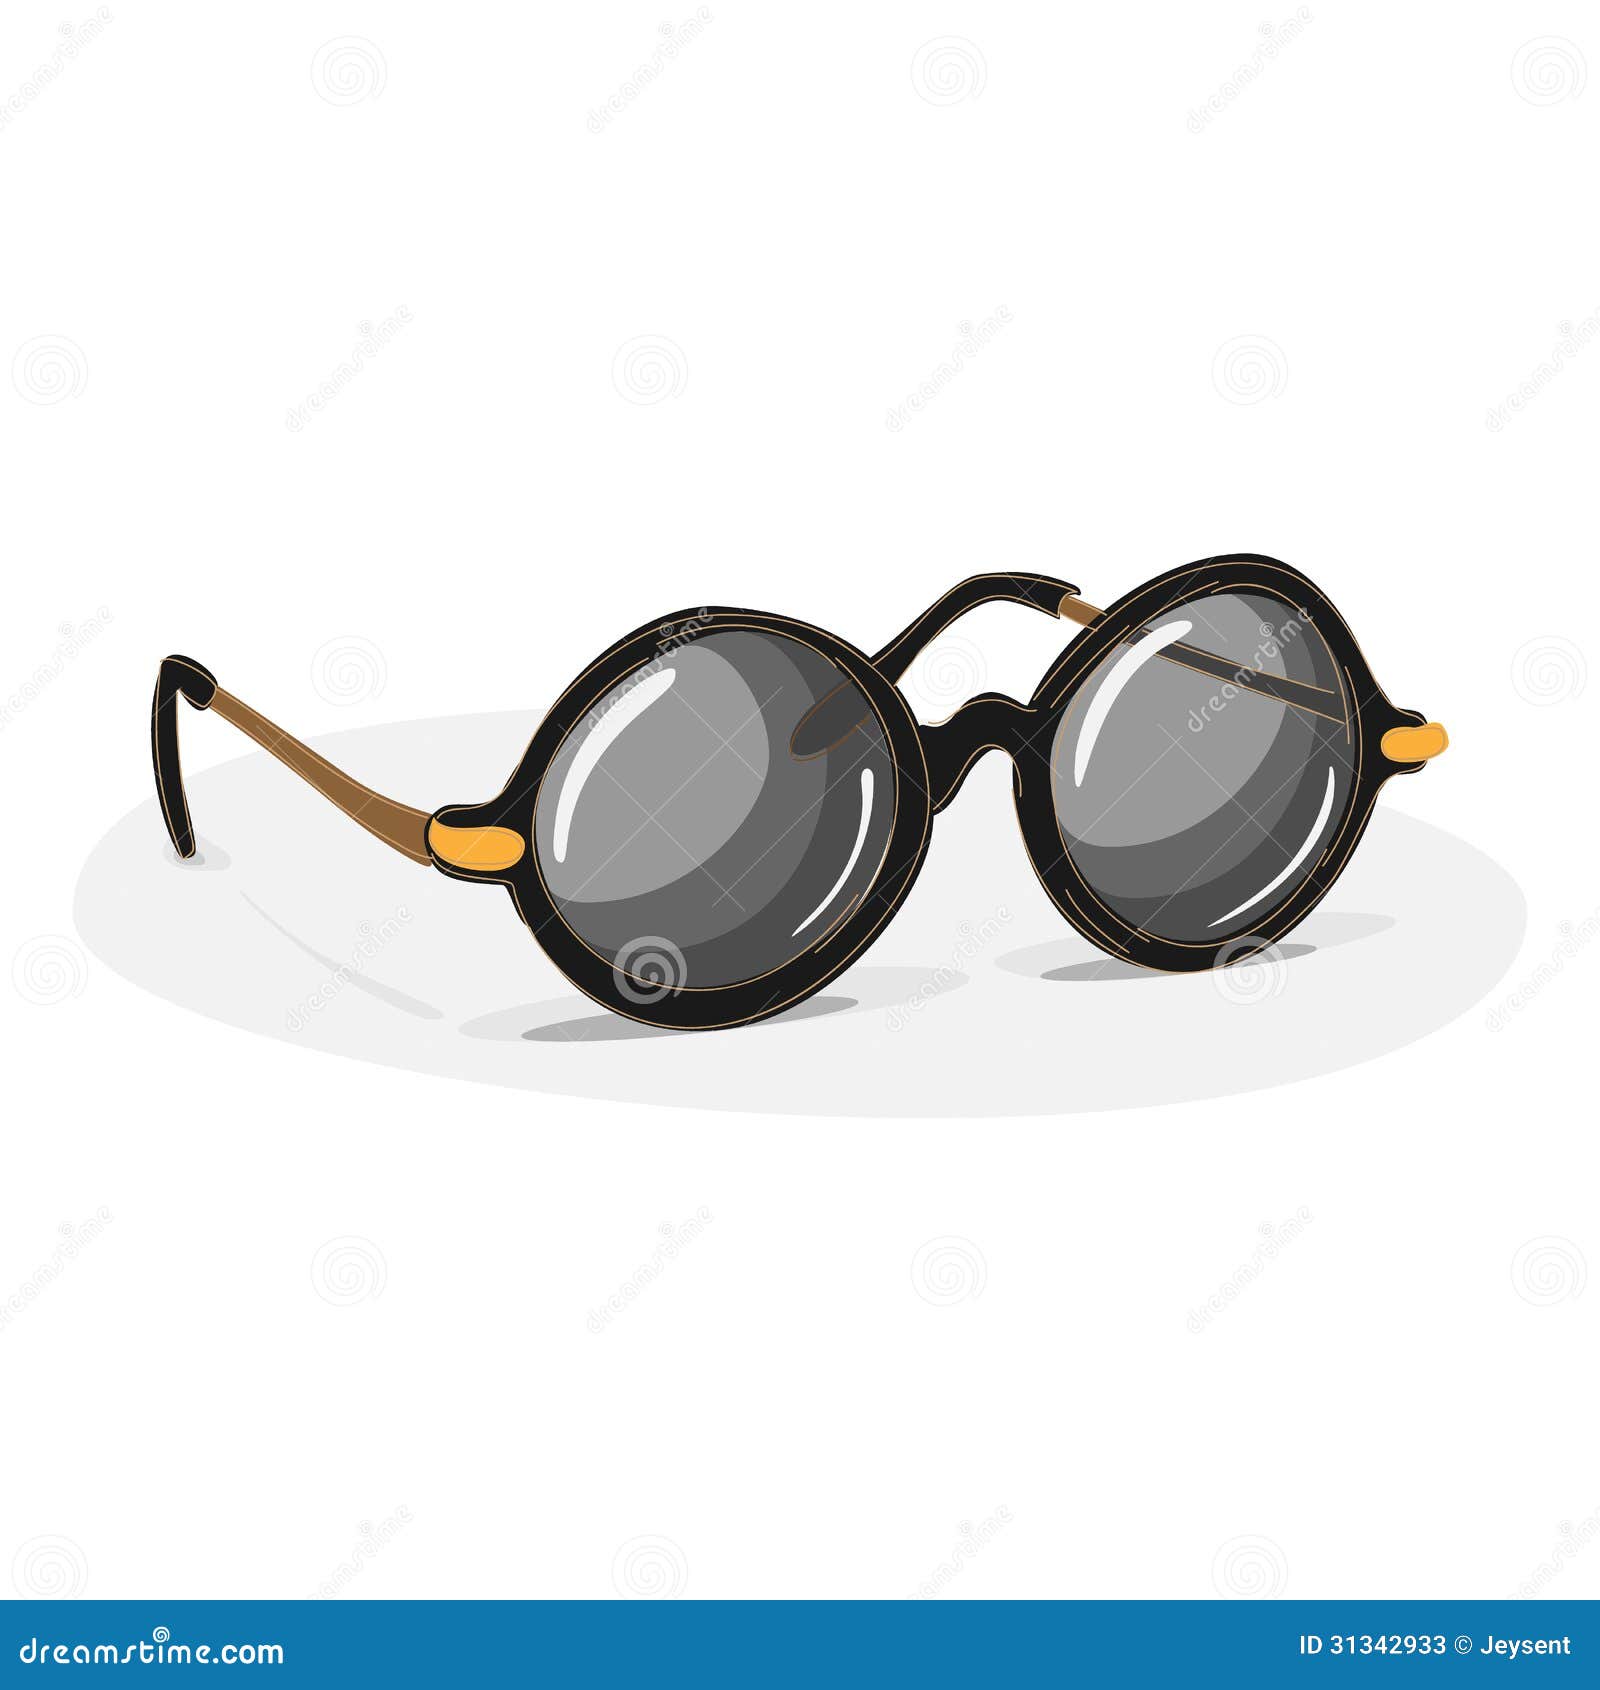 Vintage And Retro Round Frame Lens Sunglasses Stock Photos - Image